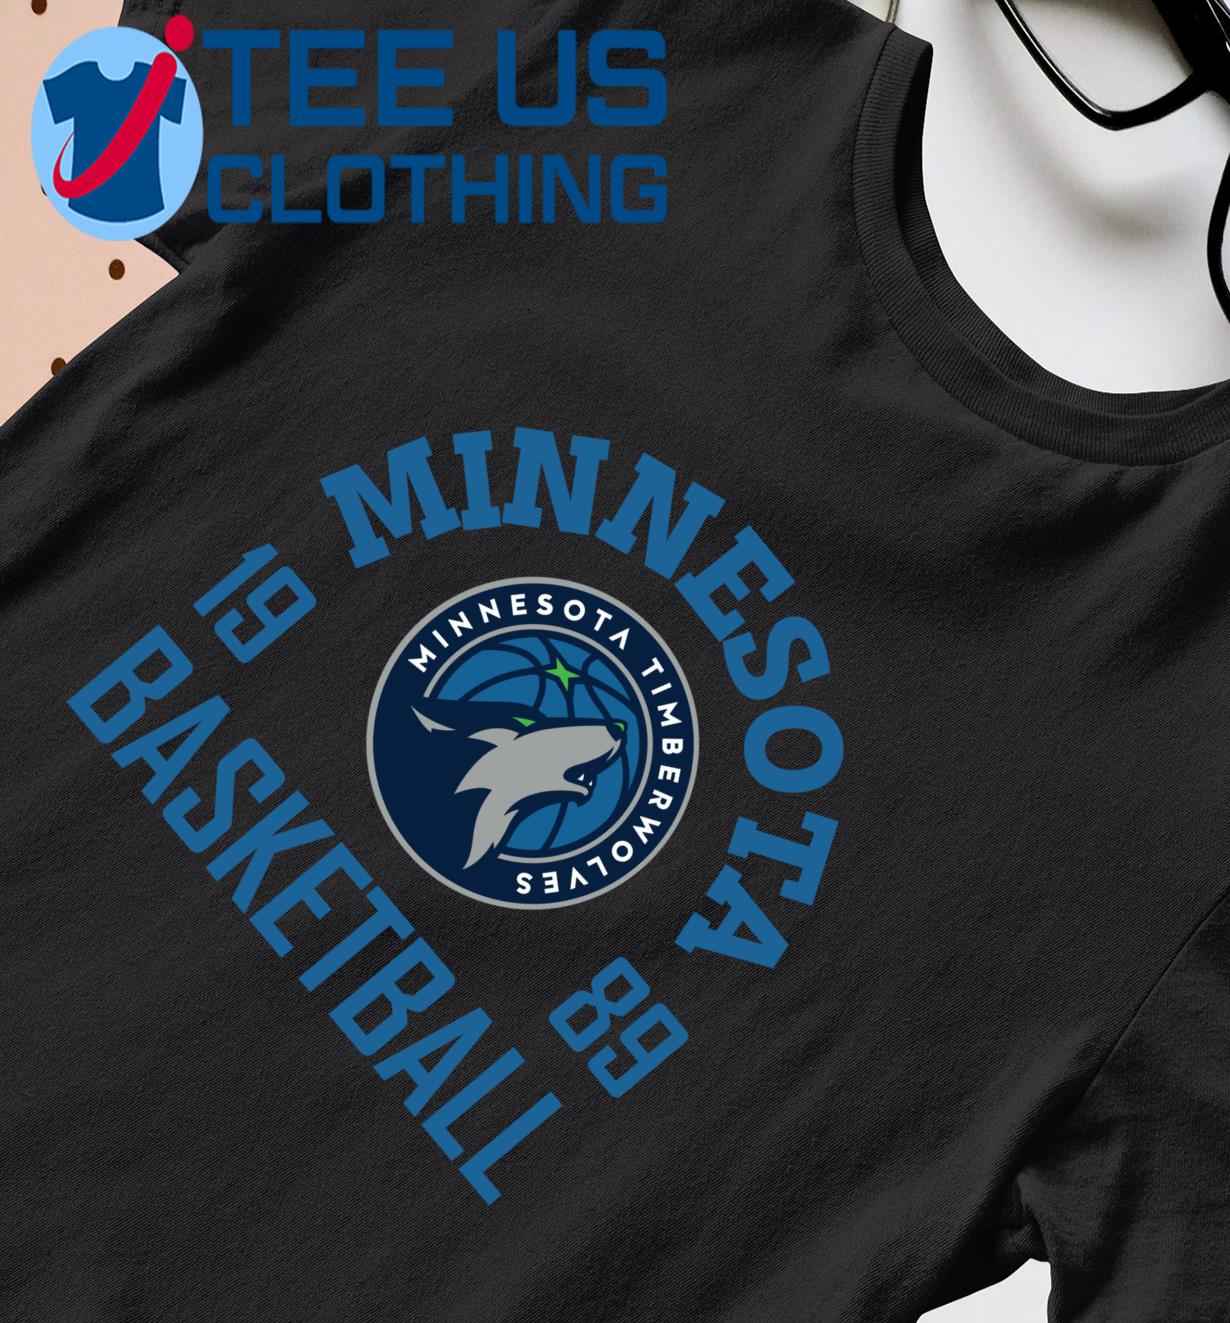 Minnesota Timberwolves Basketball 1989 shirt